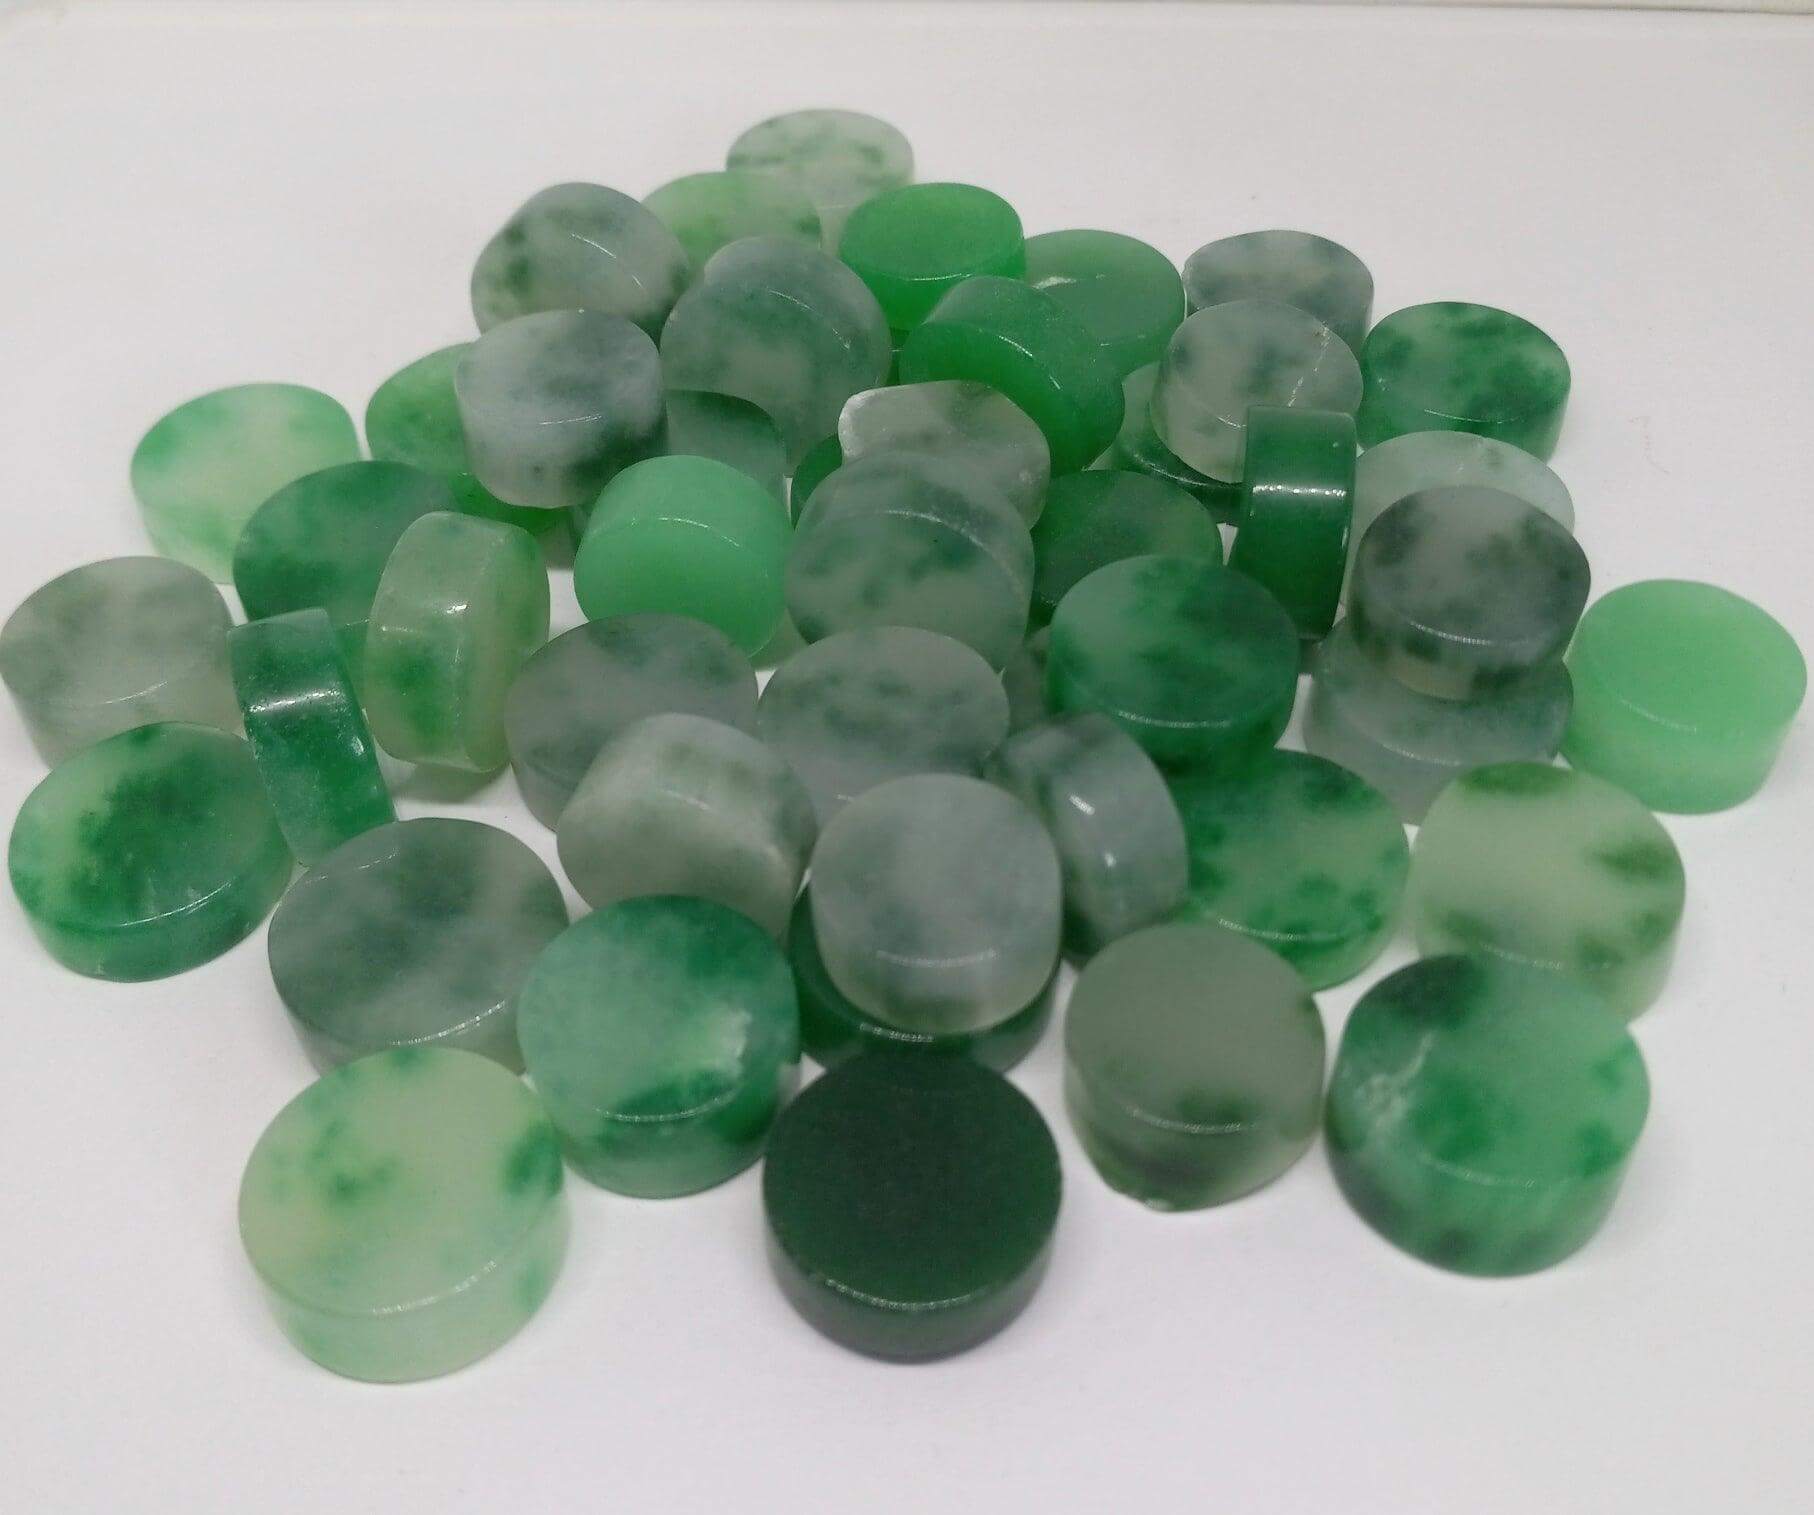 2pc Jade Natural Green Jadeite Abundance Crystal Prosperity Gemstone with Info Card - Guiding Lights Boutique